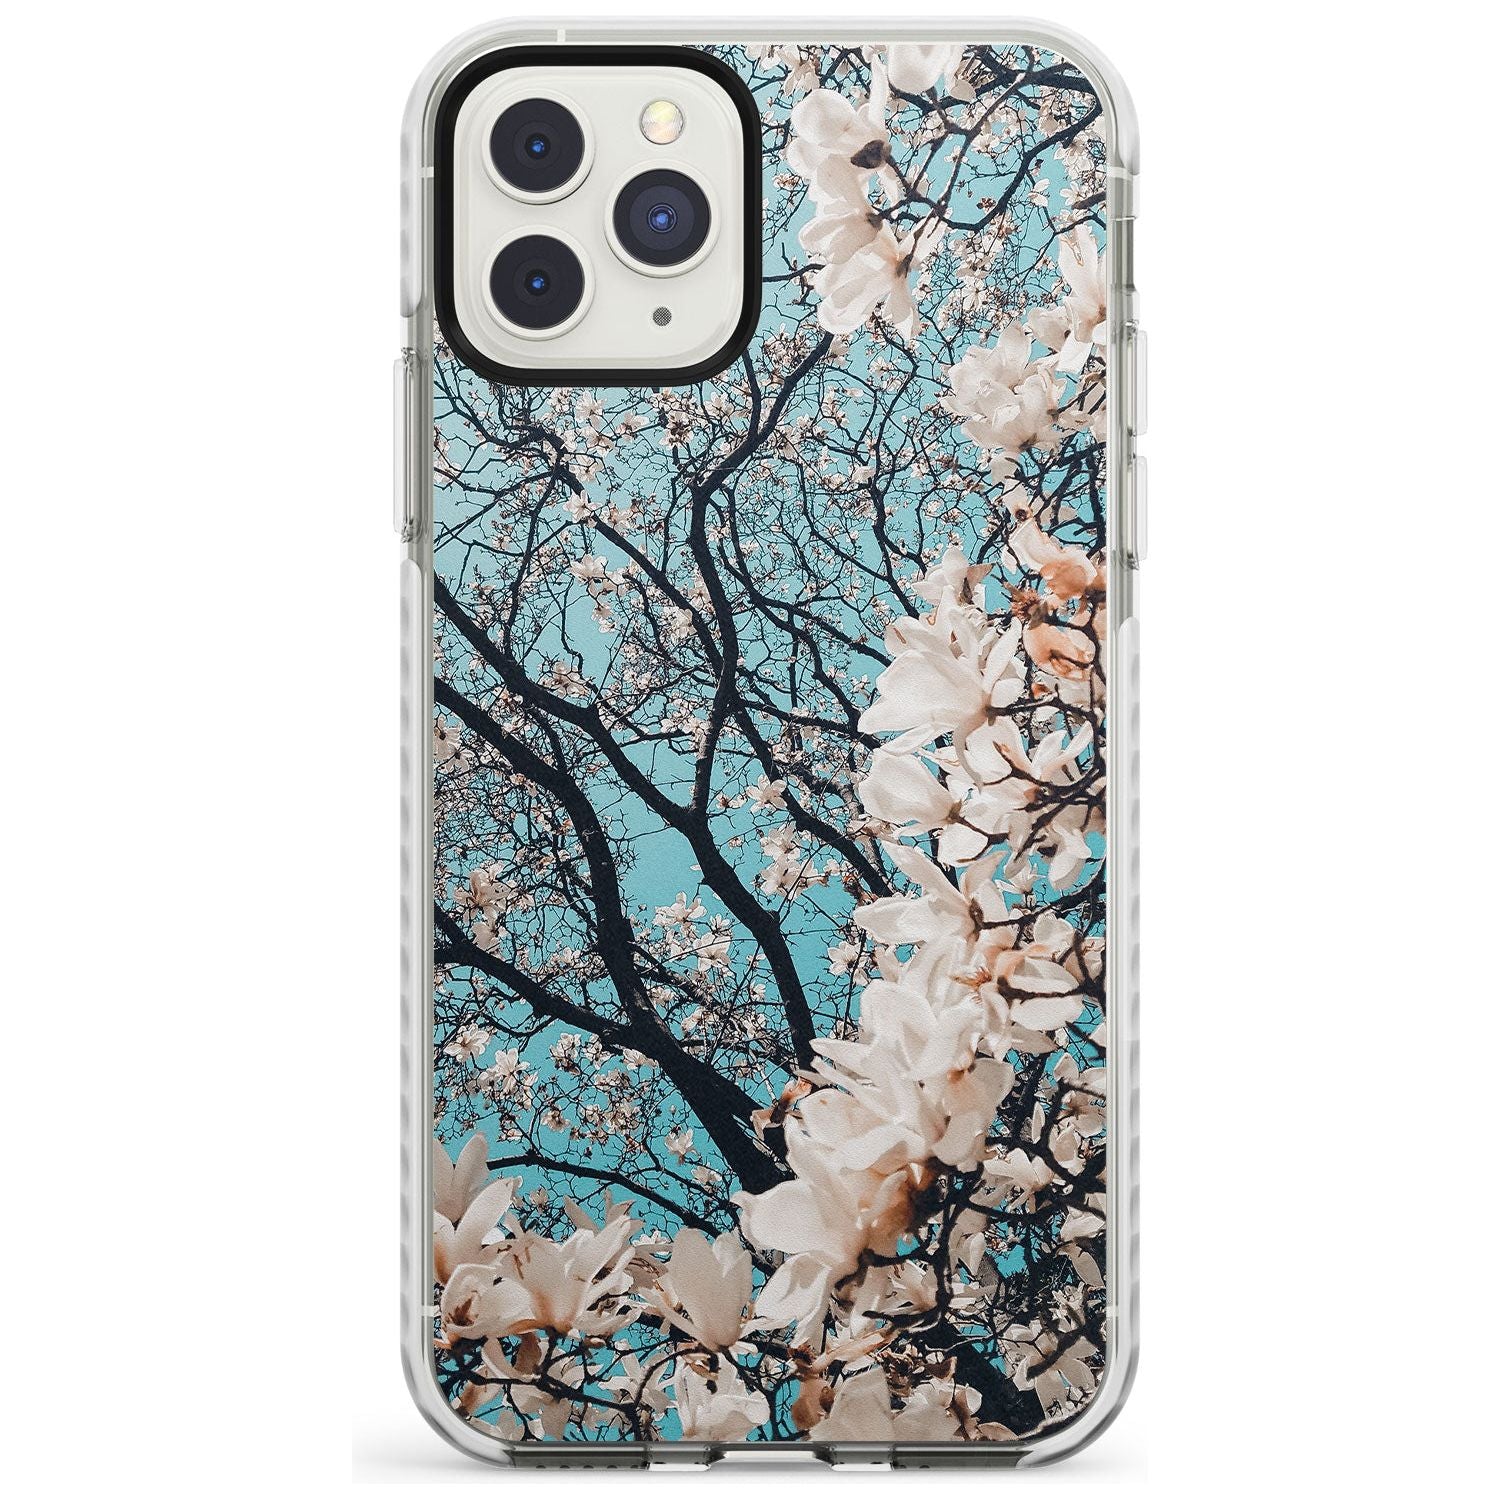 Magnolia Tree Photograph Impact Phone Case for iPhone 11 Pro Max